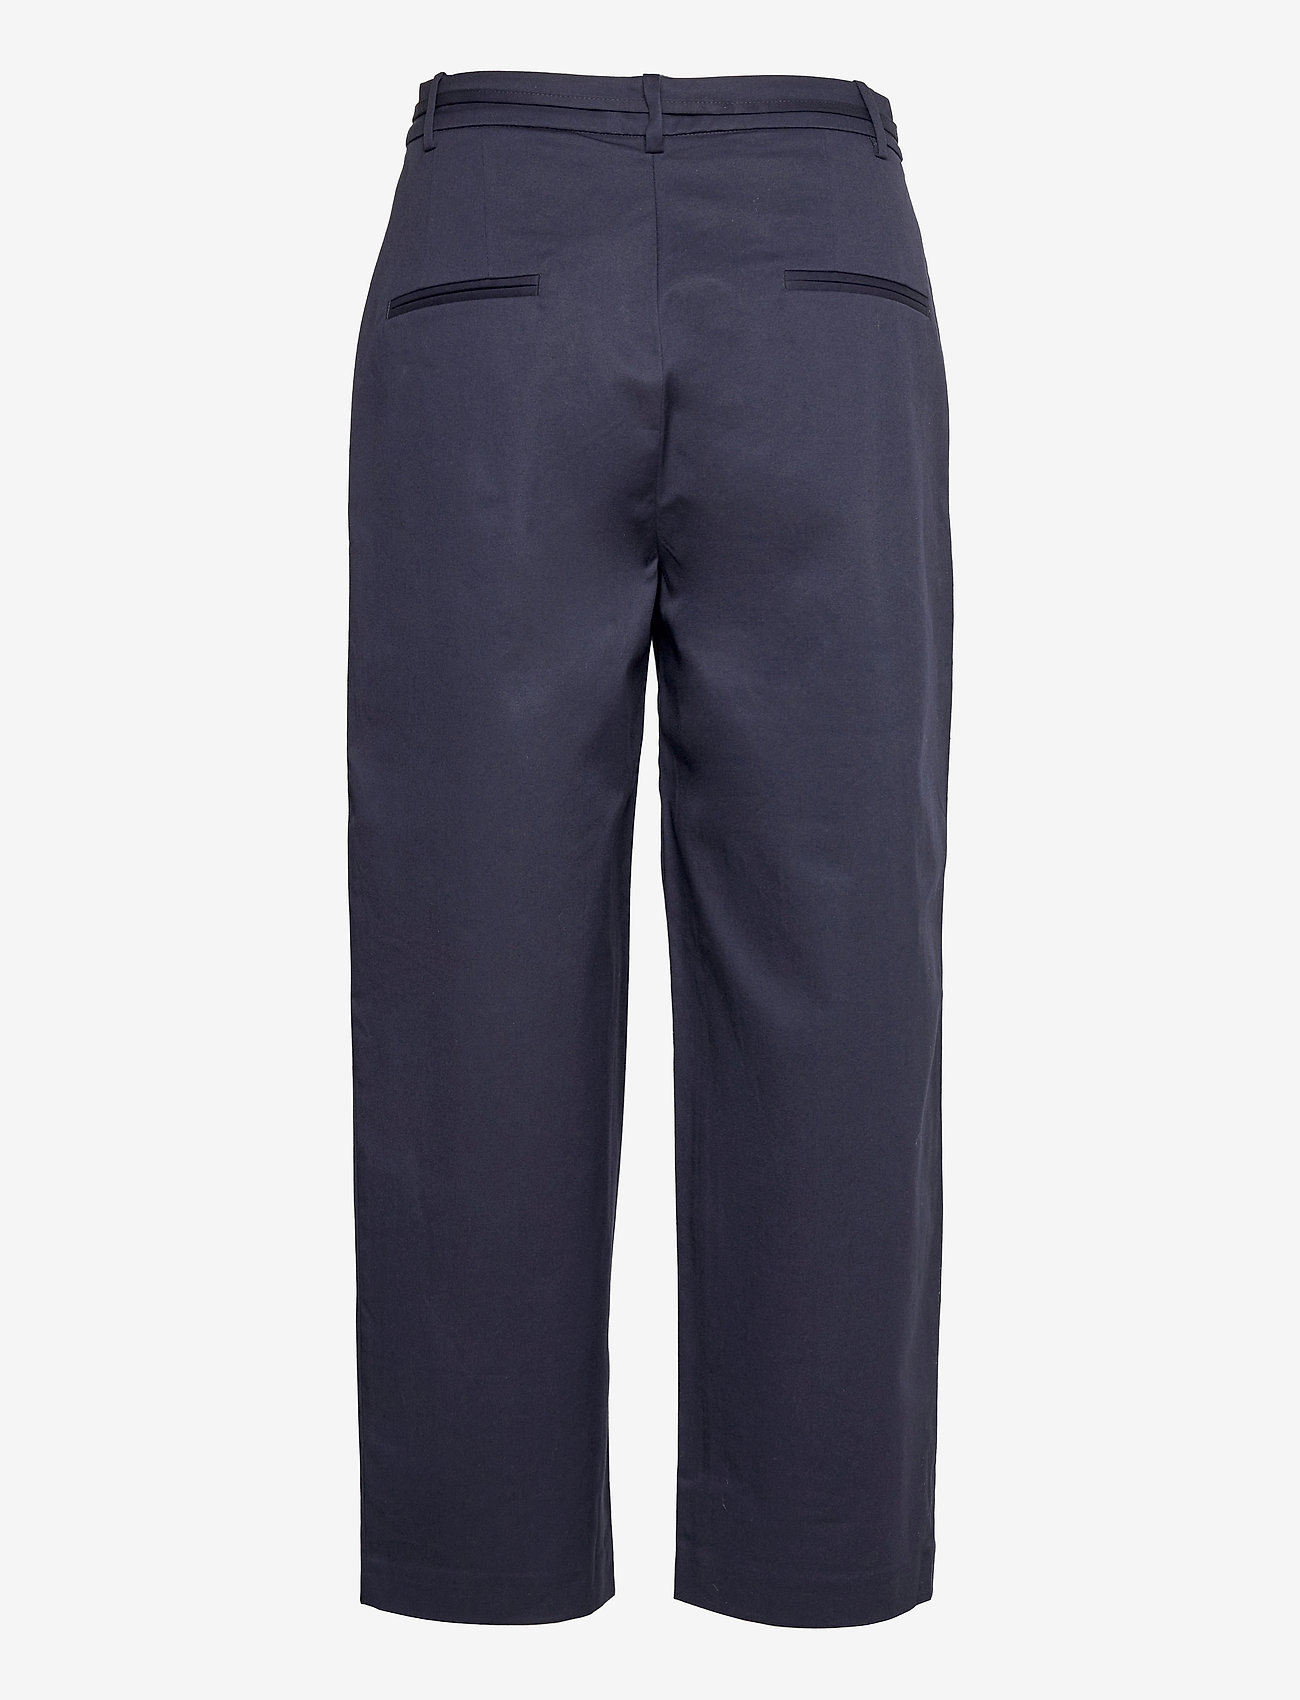 Esprit Collection Pants Woven (Navy) - 9.599,20 kr | Boozt.com